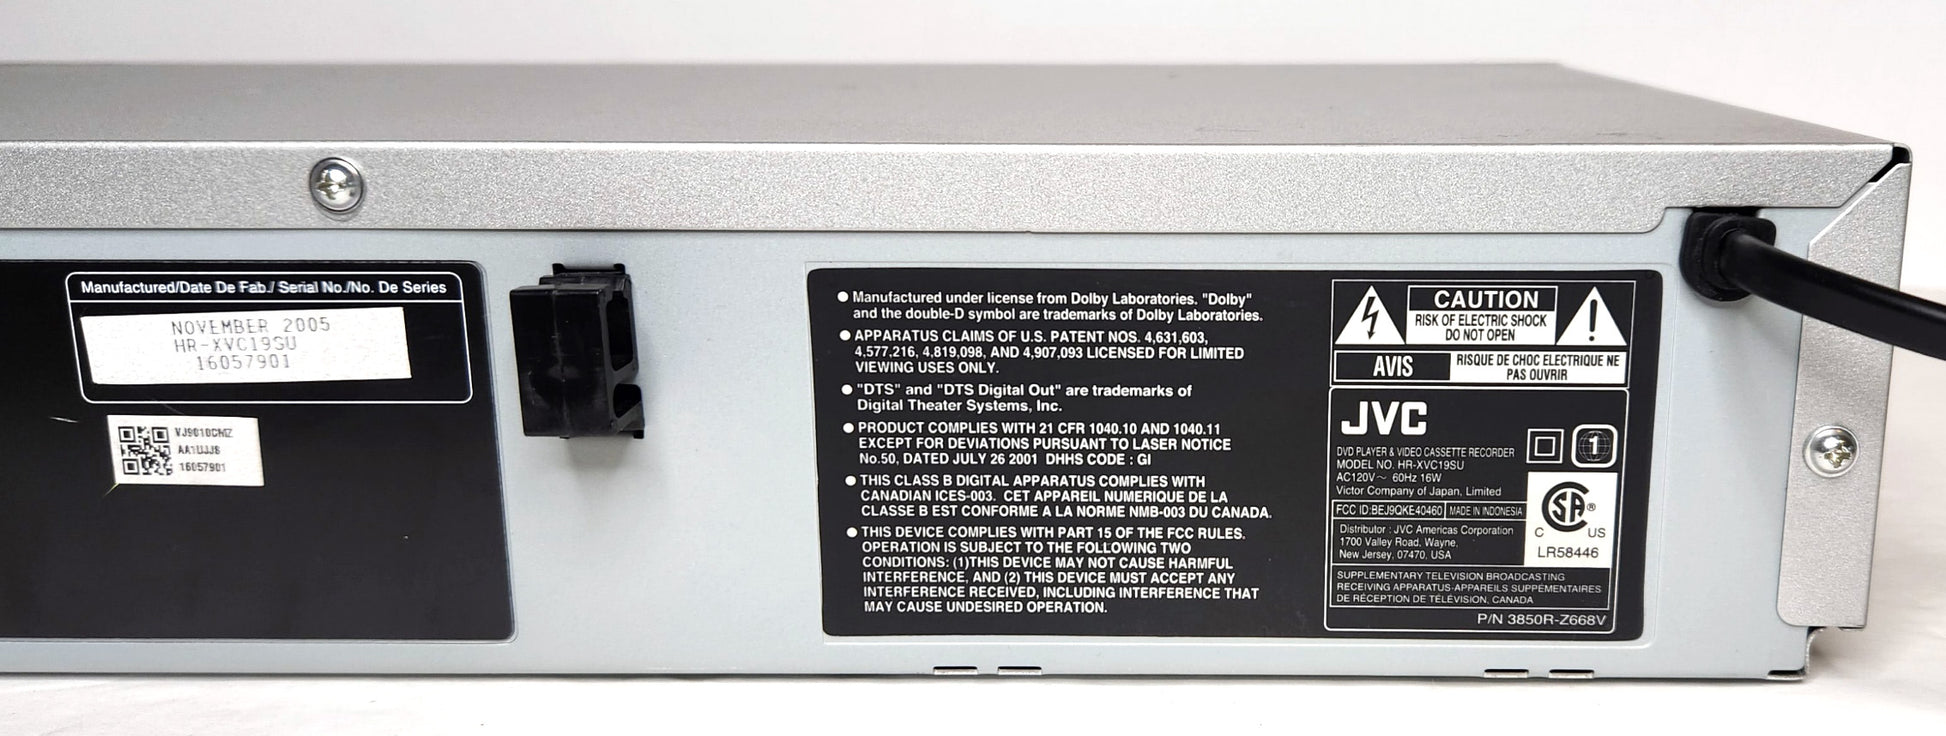 JVC HR-XVC19SU VCR/DVD Player Combo - Label